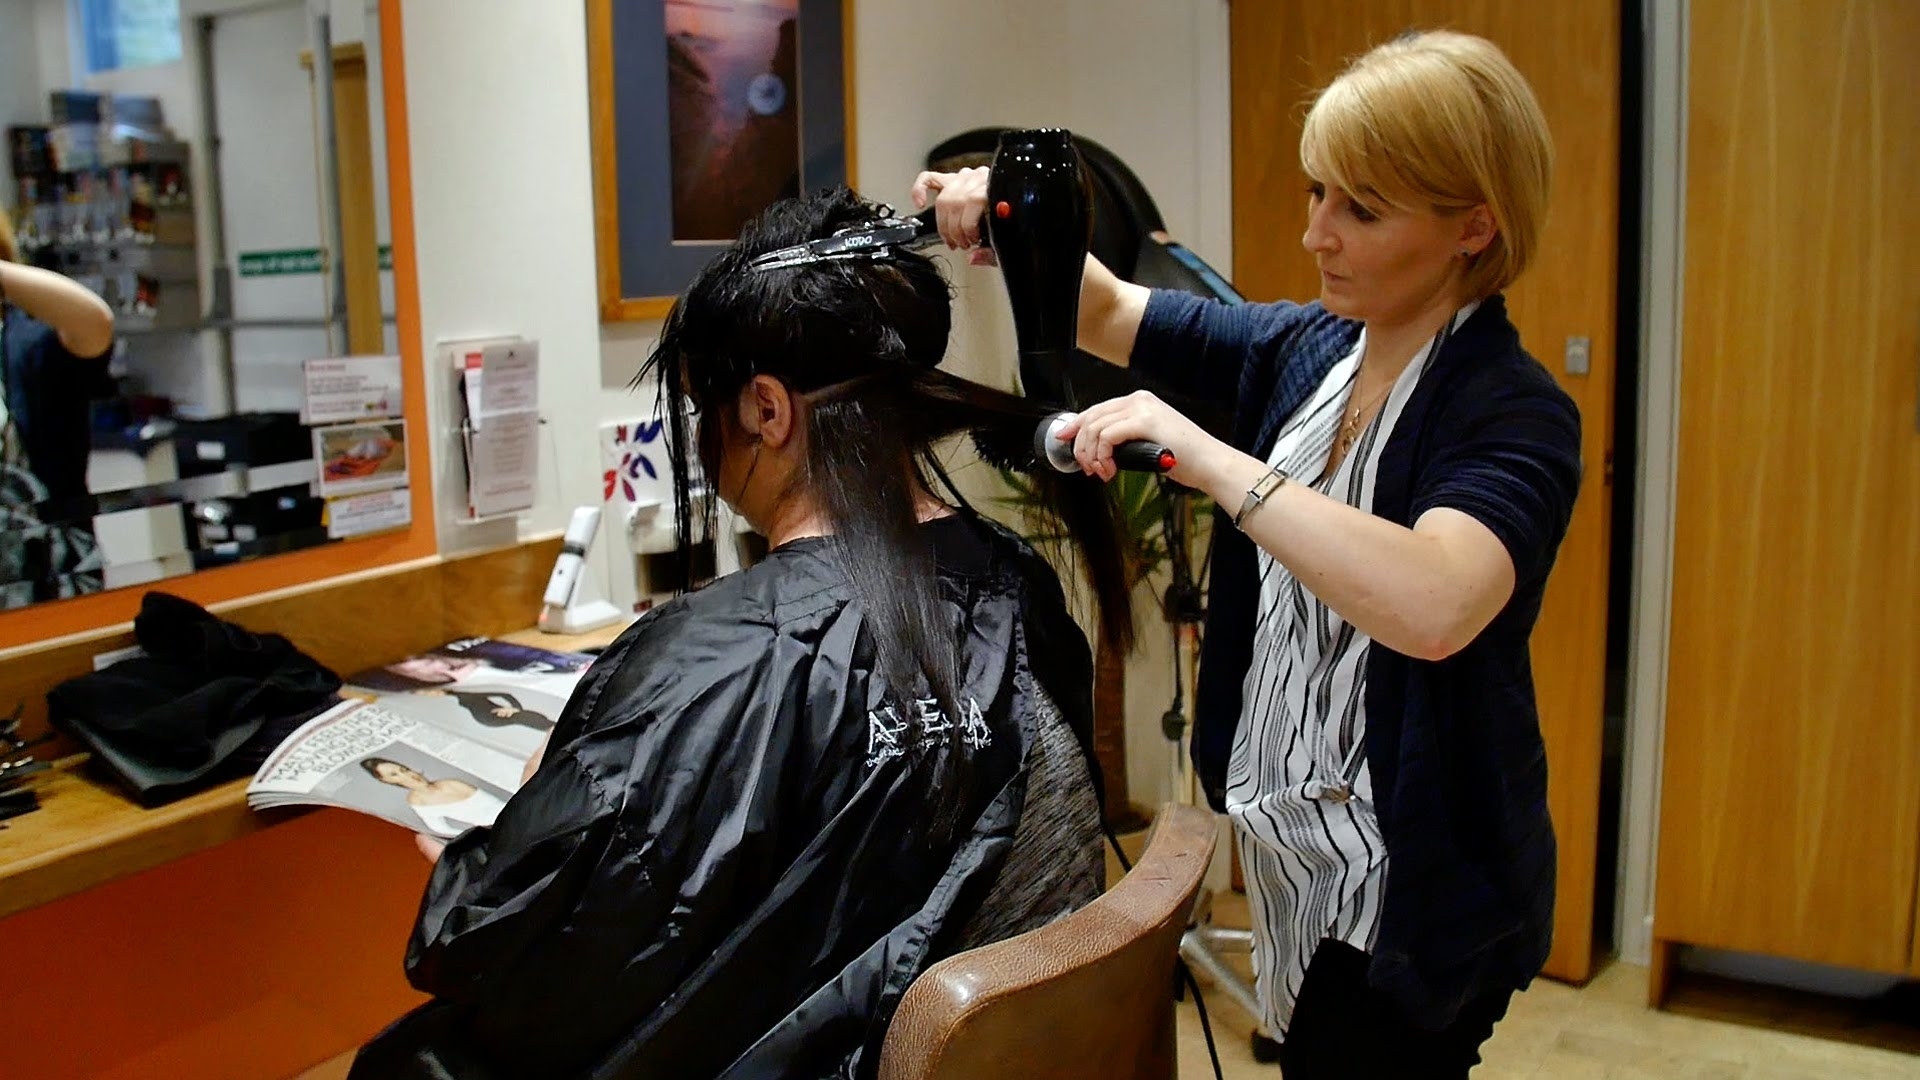 Raverys Hair Salon - Oxted / Surrey - Youtube regarding Best Haircut Salon In Surrey